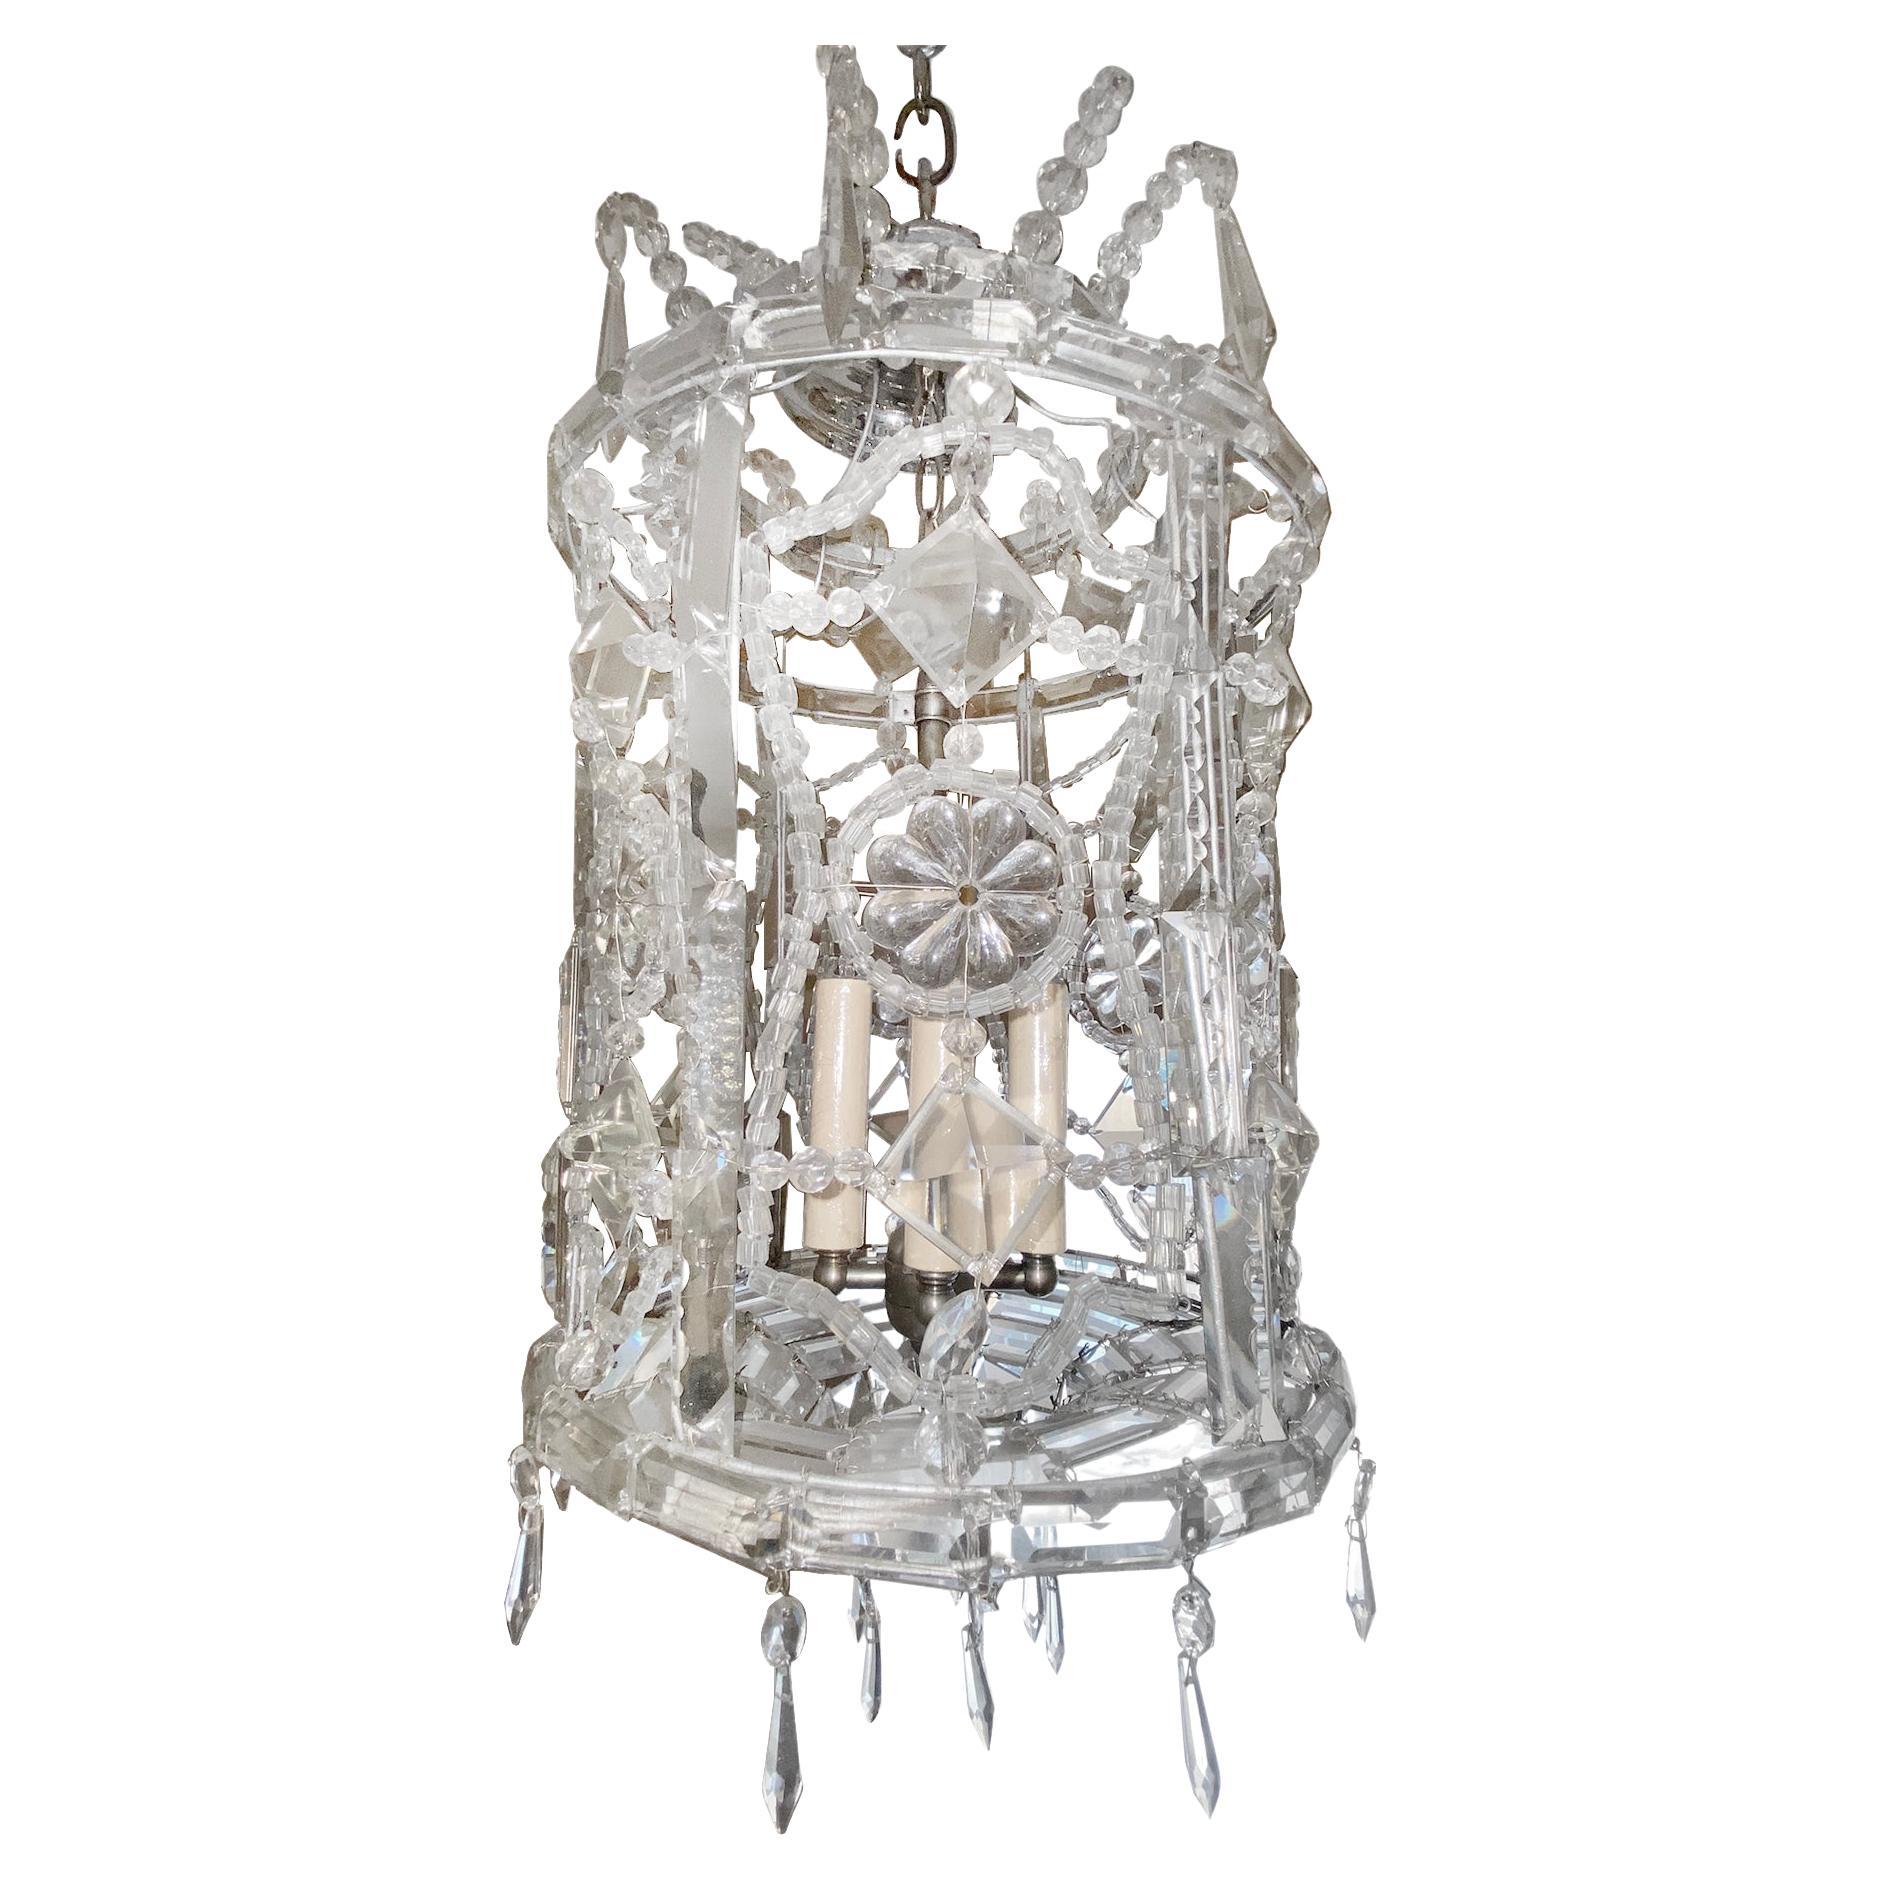 Lanterne française en cristal en forme de pagode